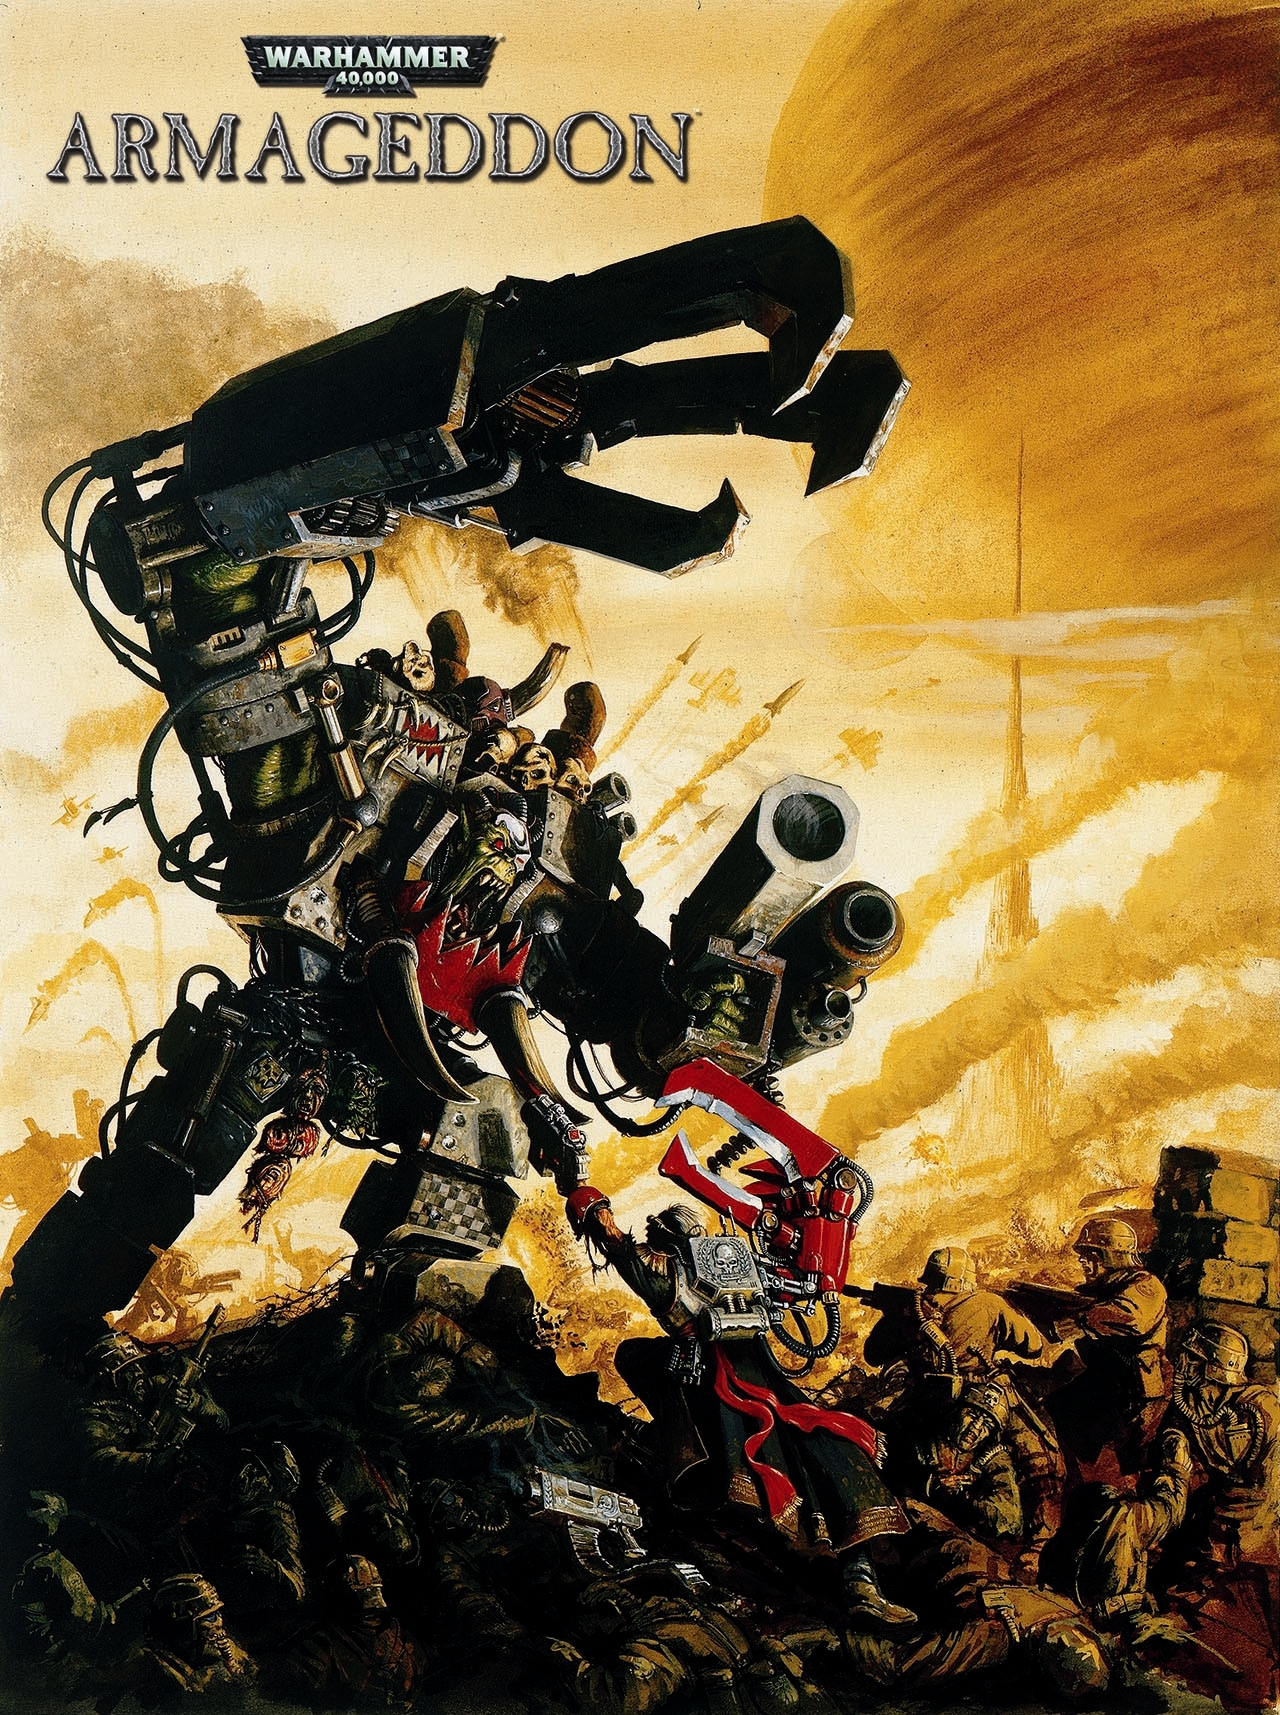 warhammer-40k-armageddon-poster.jpg